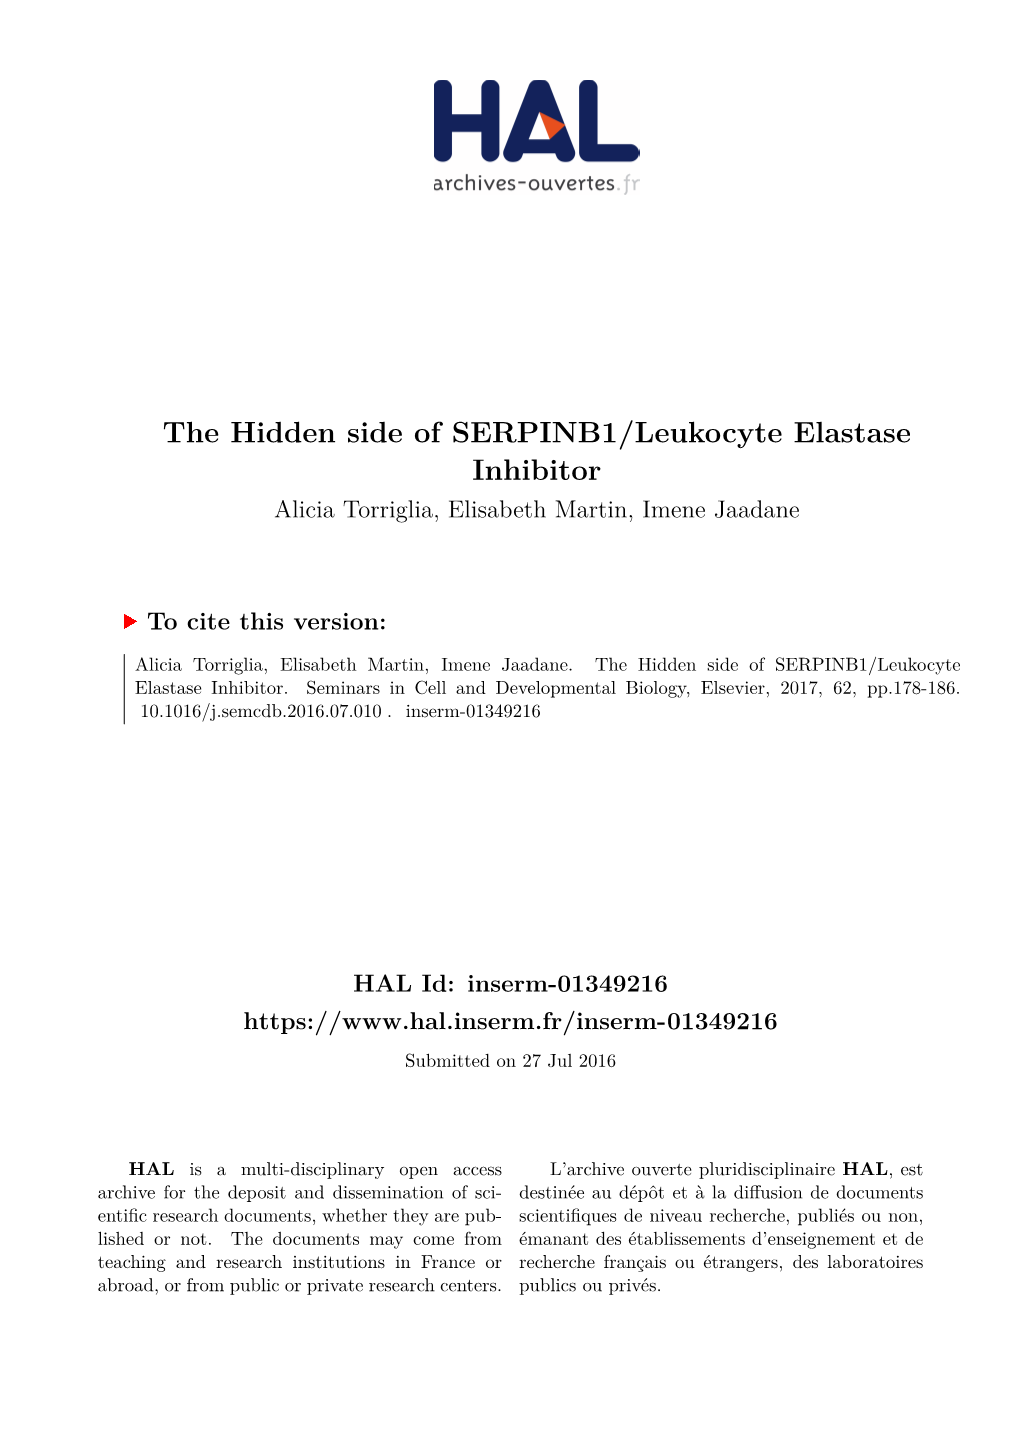 The Hidden Side of SERPINB1/Leukocyte Elastase Inhibitor Alicia Torriglia, Elisabeth Martin, Imene Jaadane